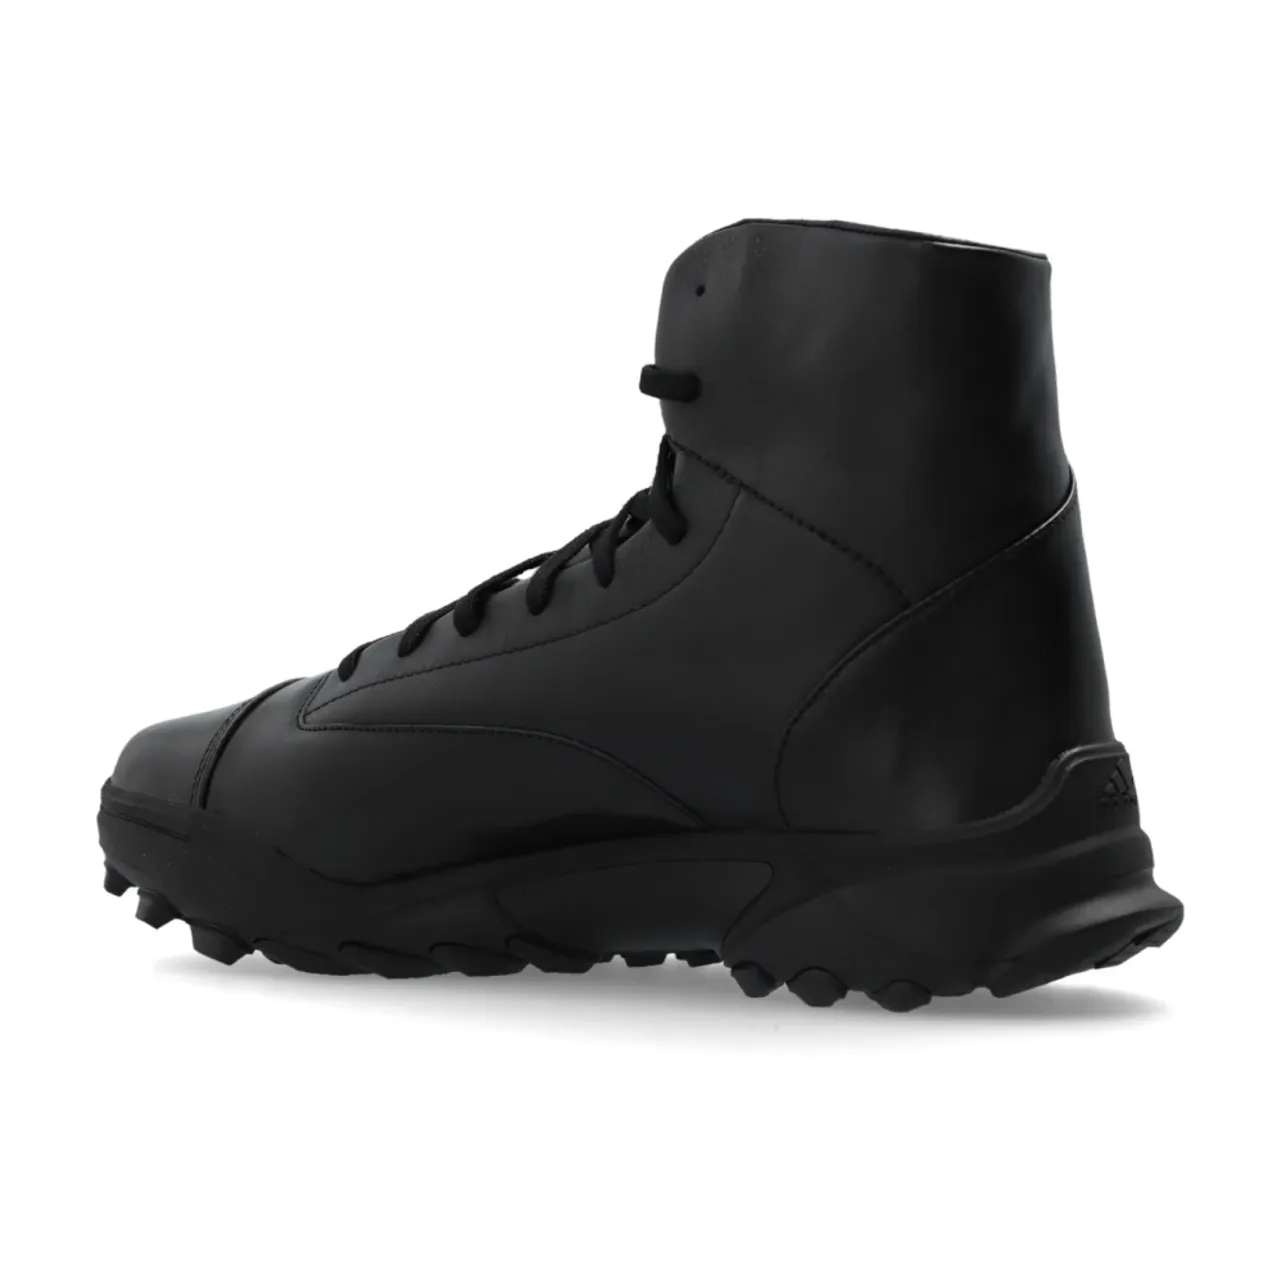 ‘Gsg9’ High-Top Sneakers Y-3